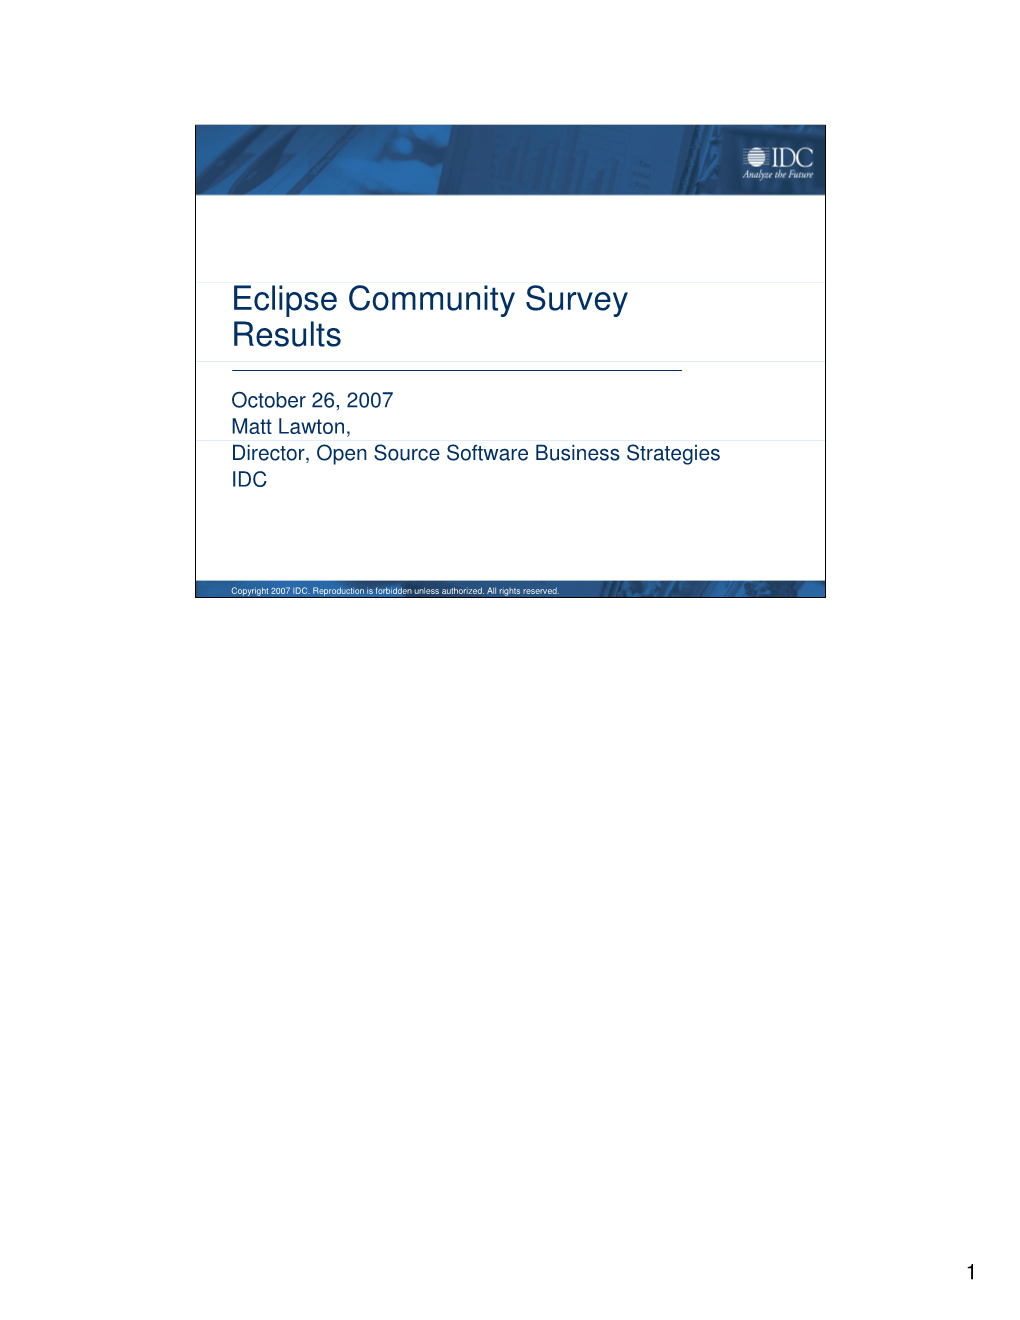 Eclipse Community Survey Results